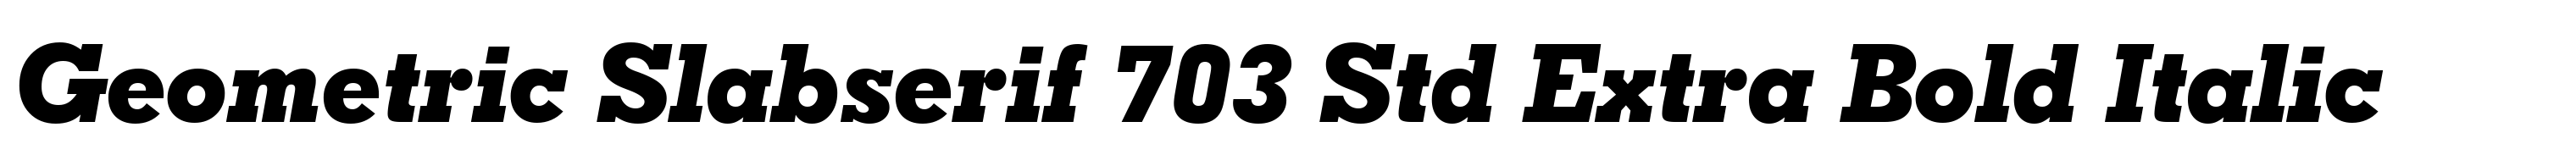 Geometric Slabserif 703 Std Extra Bold Italic